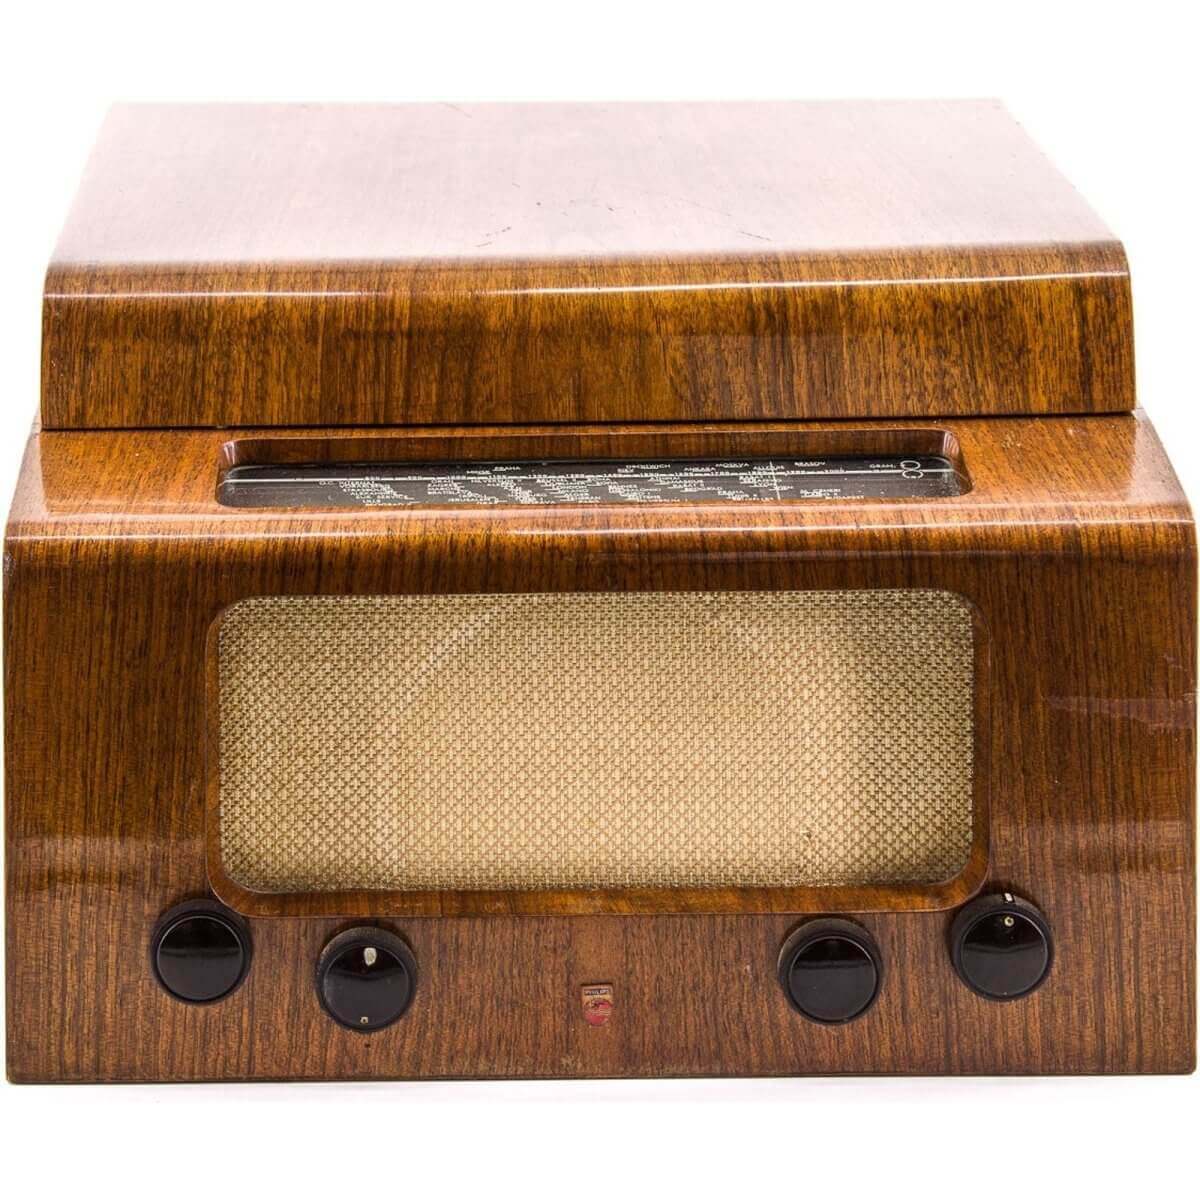 Radio Bluetooth Philips Vintage 50’S enceinte connectée bluetooth haut de gamme prodige radio vintage design